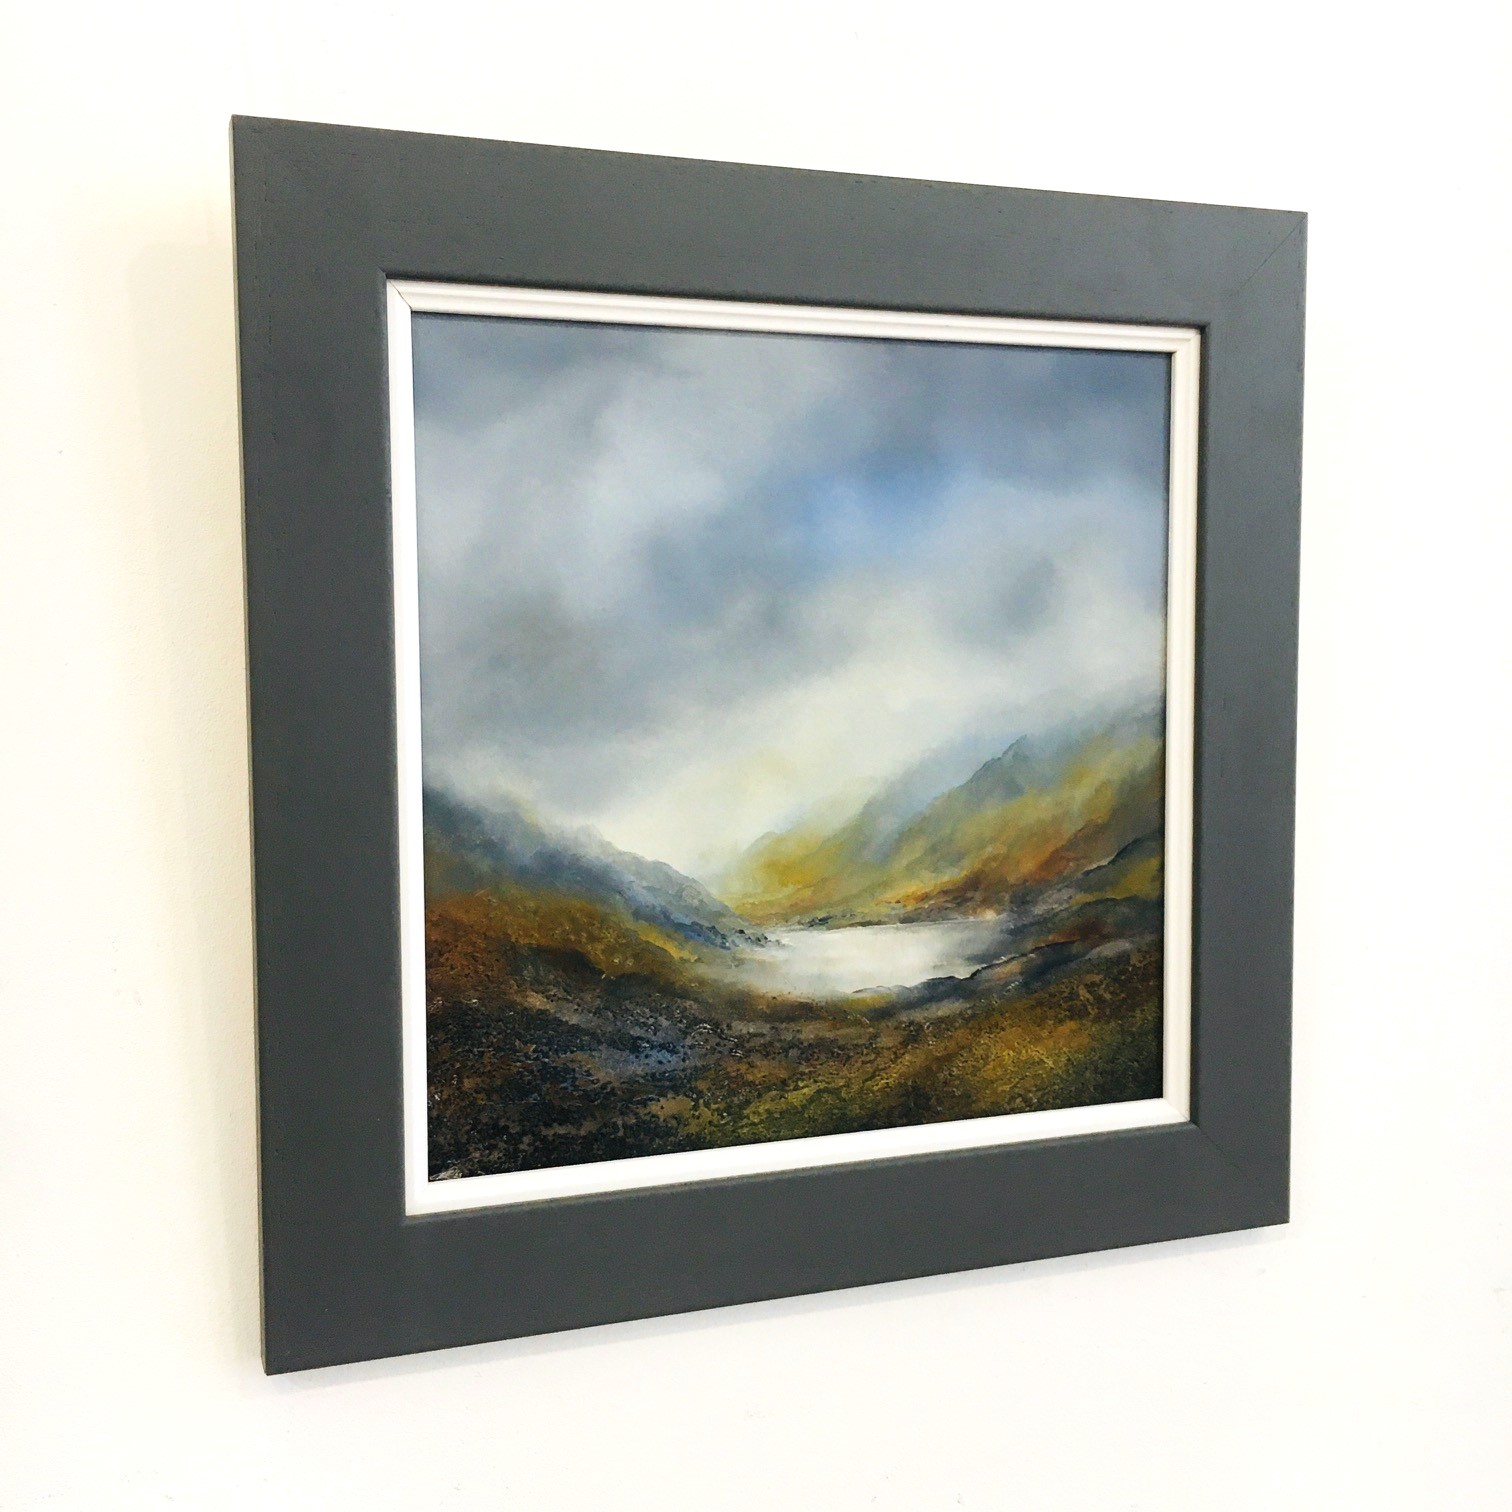 'Loch Slapin - Isle of Skye' by artist Peter Dworok